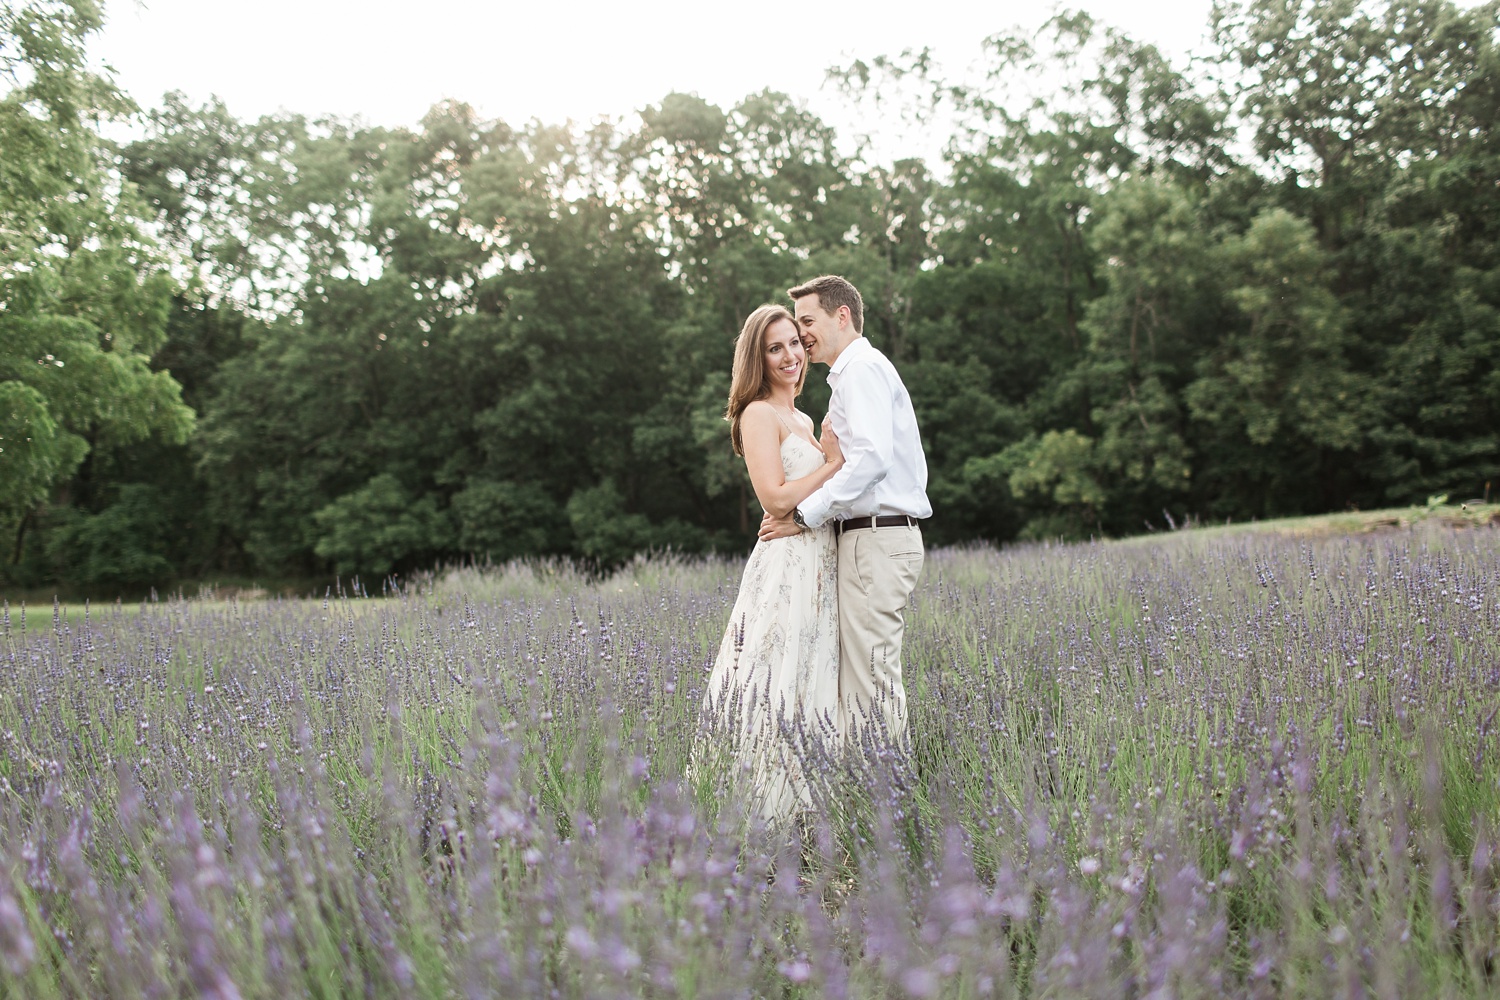 Lavender Farm Summer Sunset Engagement | Peace Valley Park Engagement Photographer | Victoria and Chris